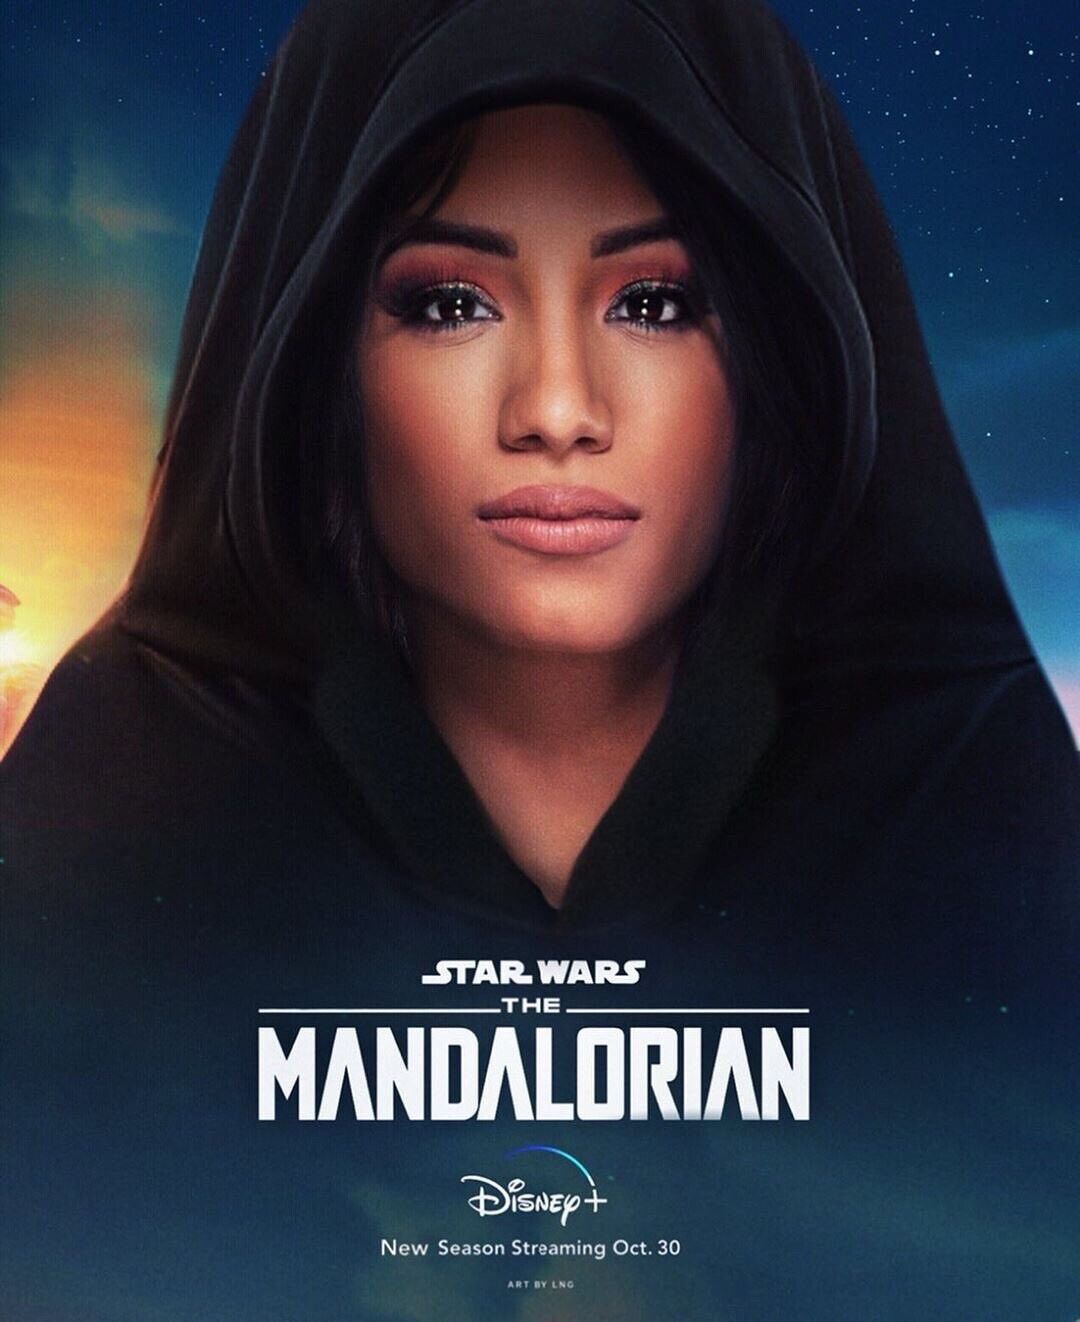 The Mandalorian Sasha Banks Photo Poster painting 8x10 Star Wars Disney WWE